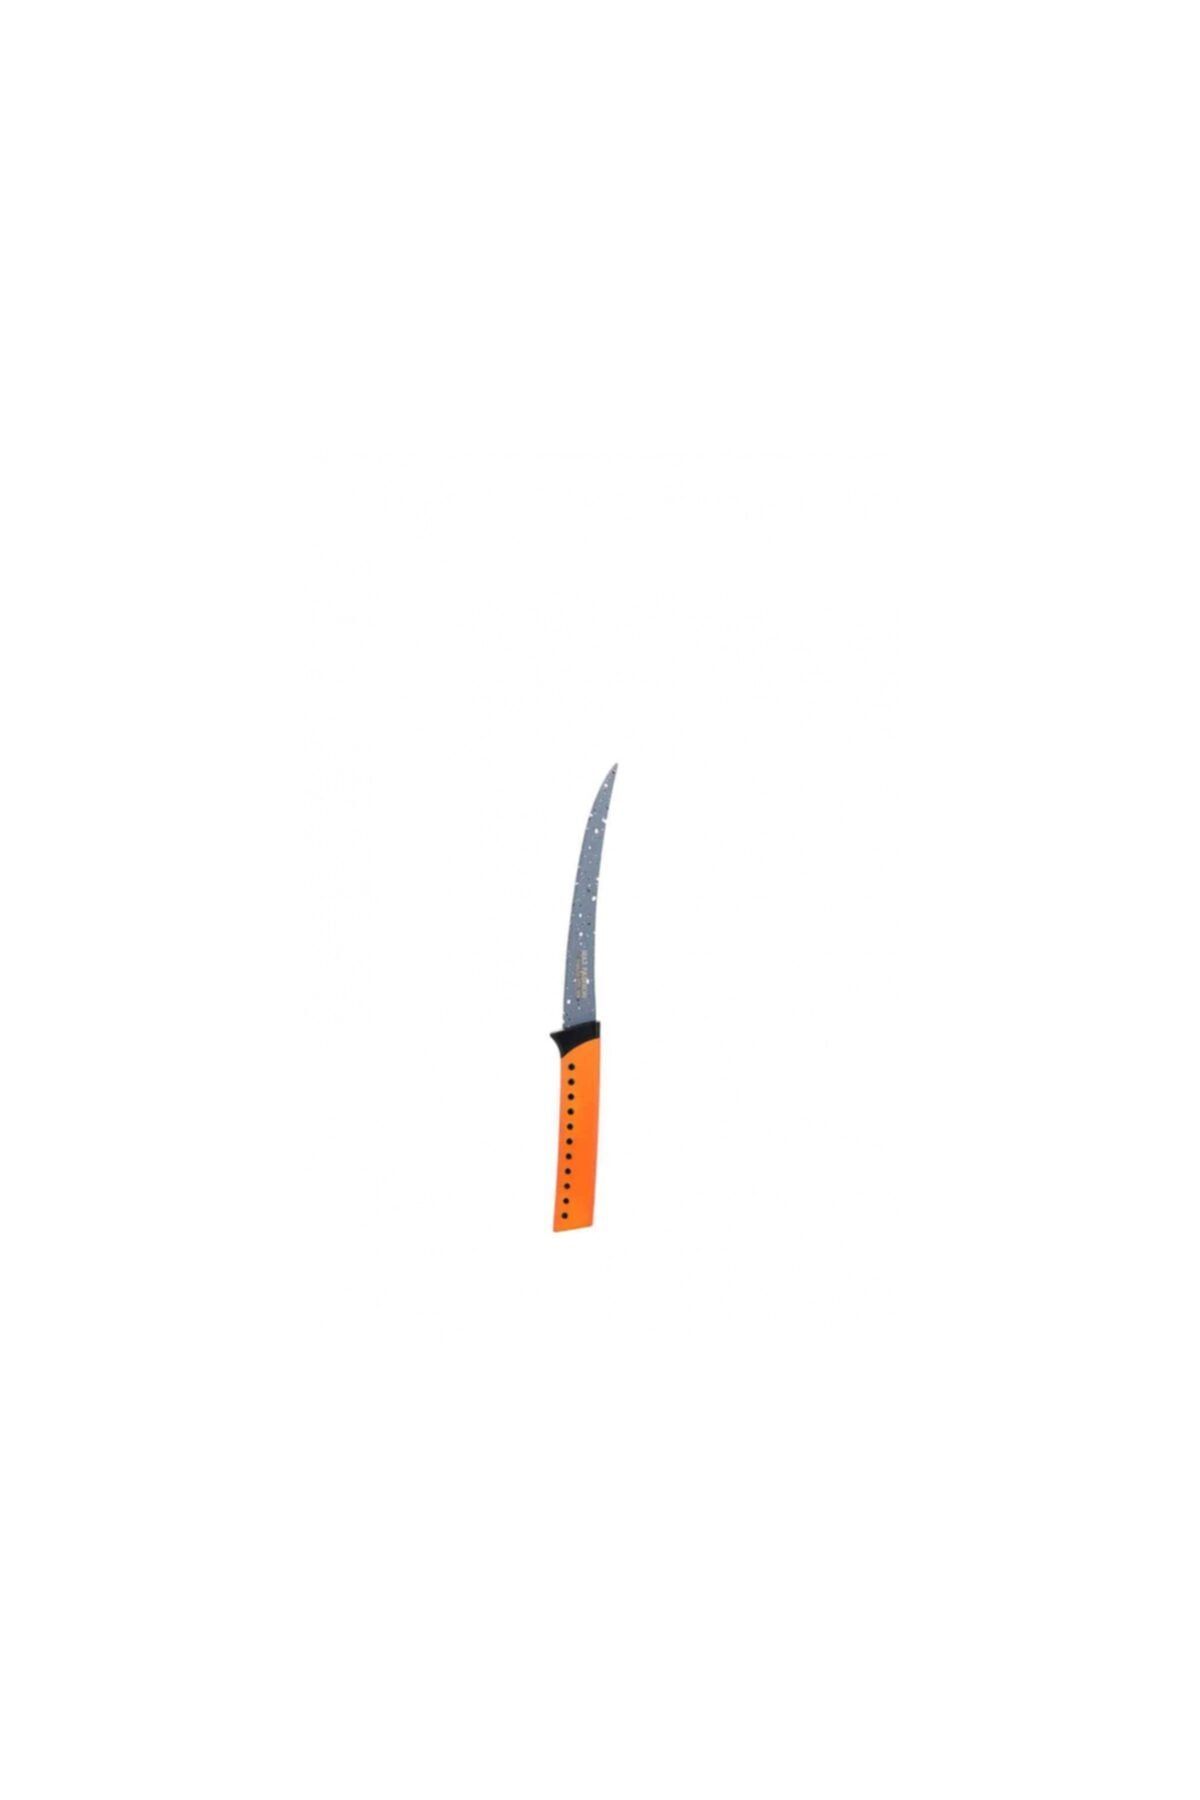 Taç 23 Cm Soyma Bıçağı Turuncu